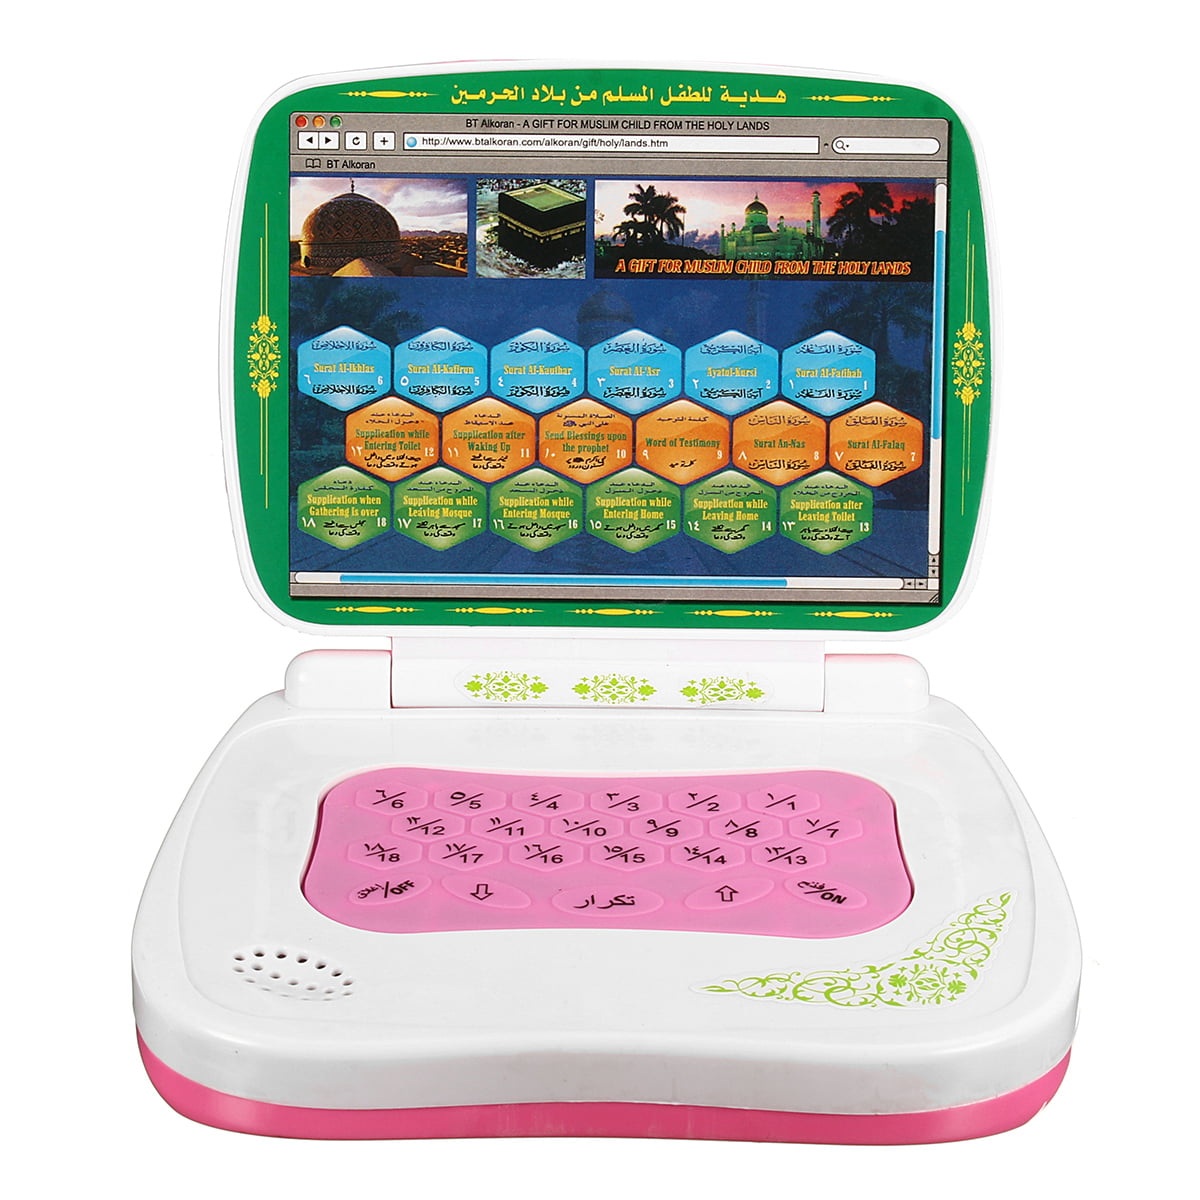 Quran Arabic Tablet Machine Muslim Koran Islamic Learning Education Toy Kids